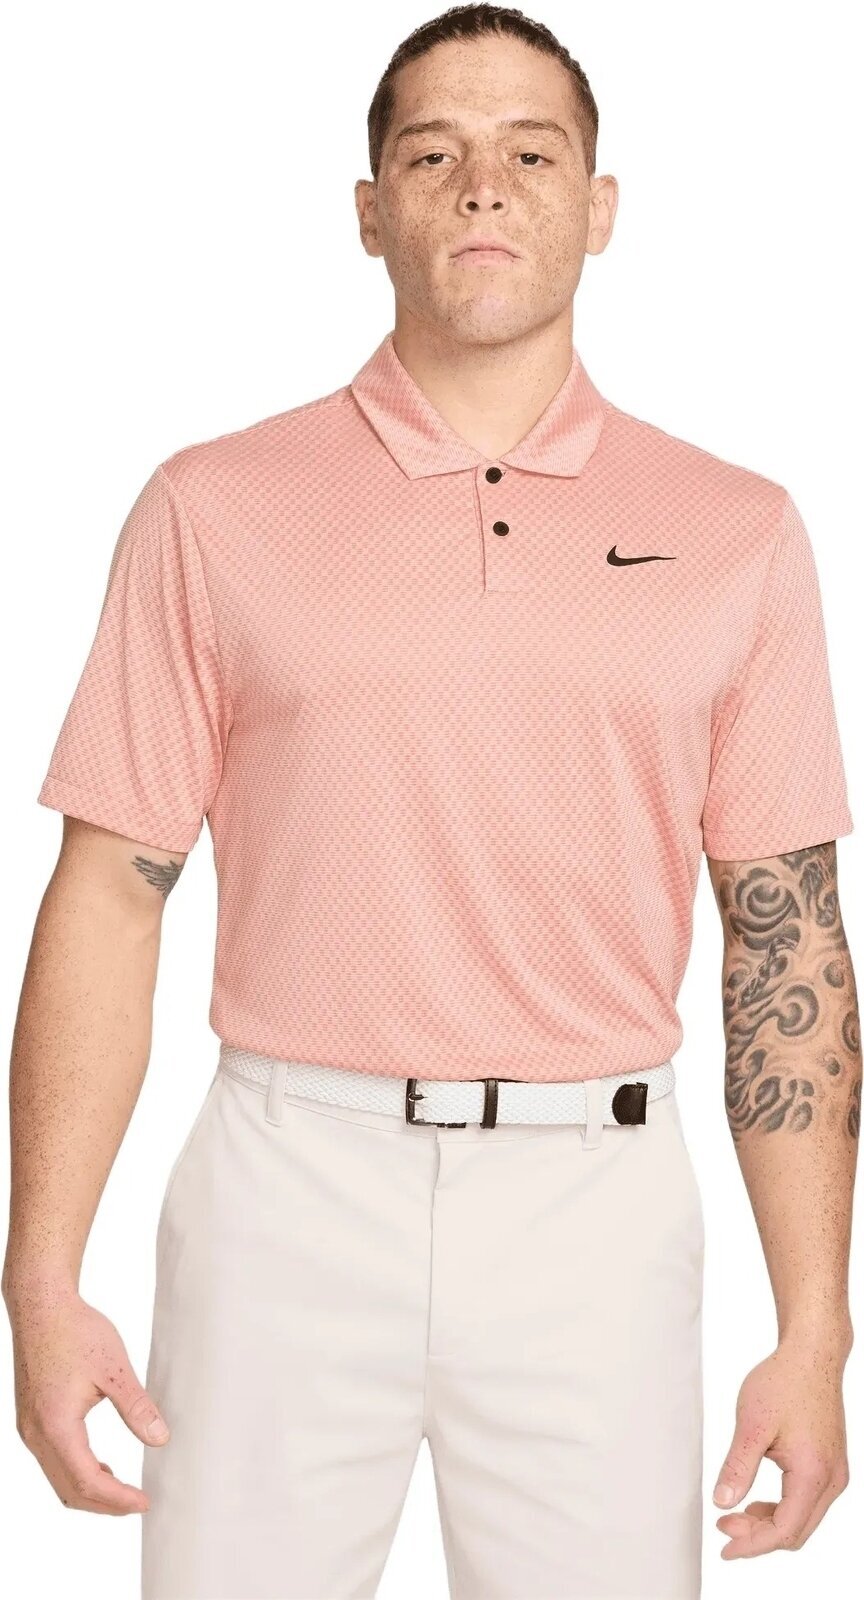 Camiseta polo Nike Dri-Fit Tour Jacquard Mens Polo Light Madder Root/Guava Ice/Black XL Camiseta polo